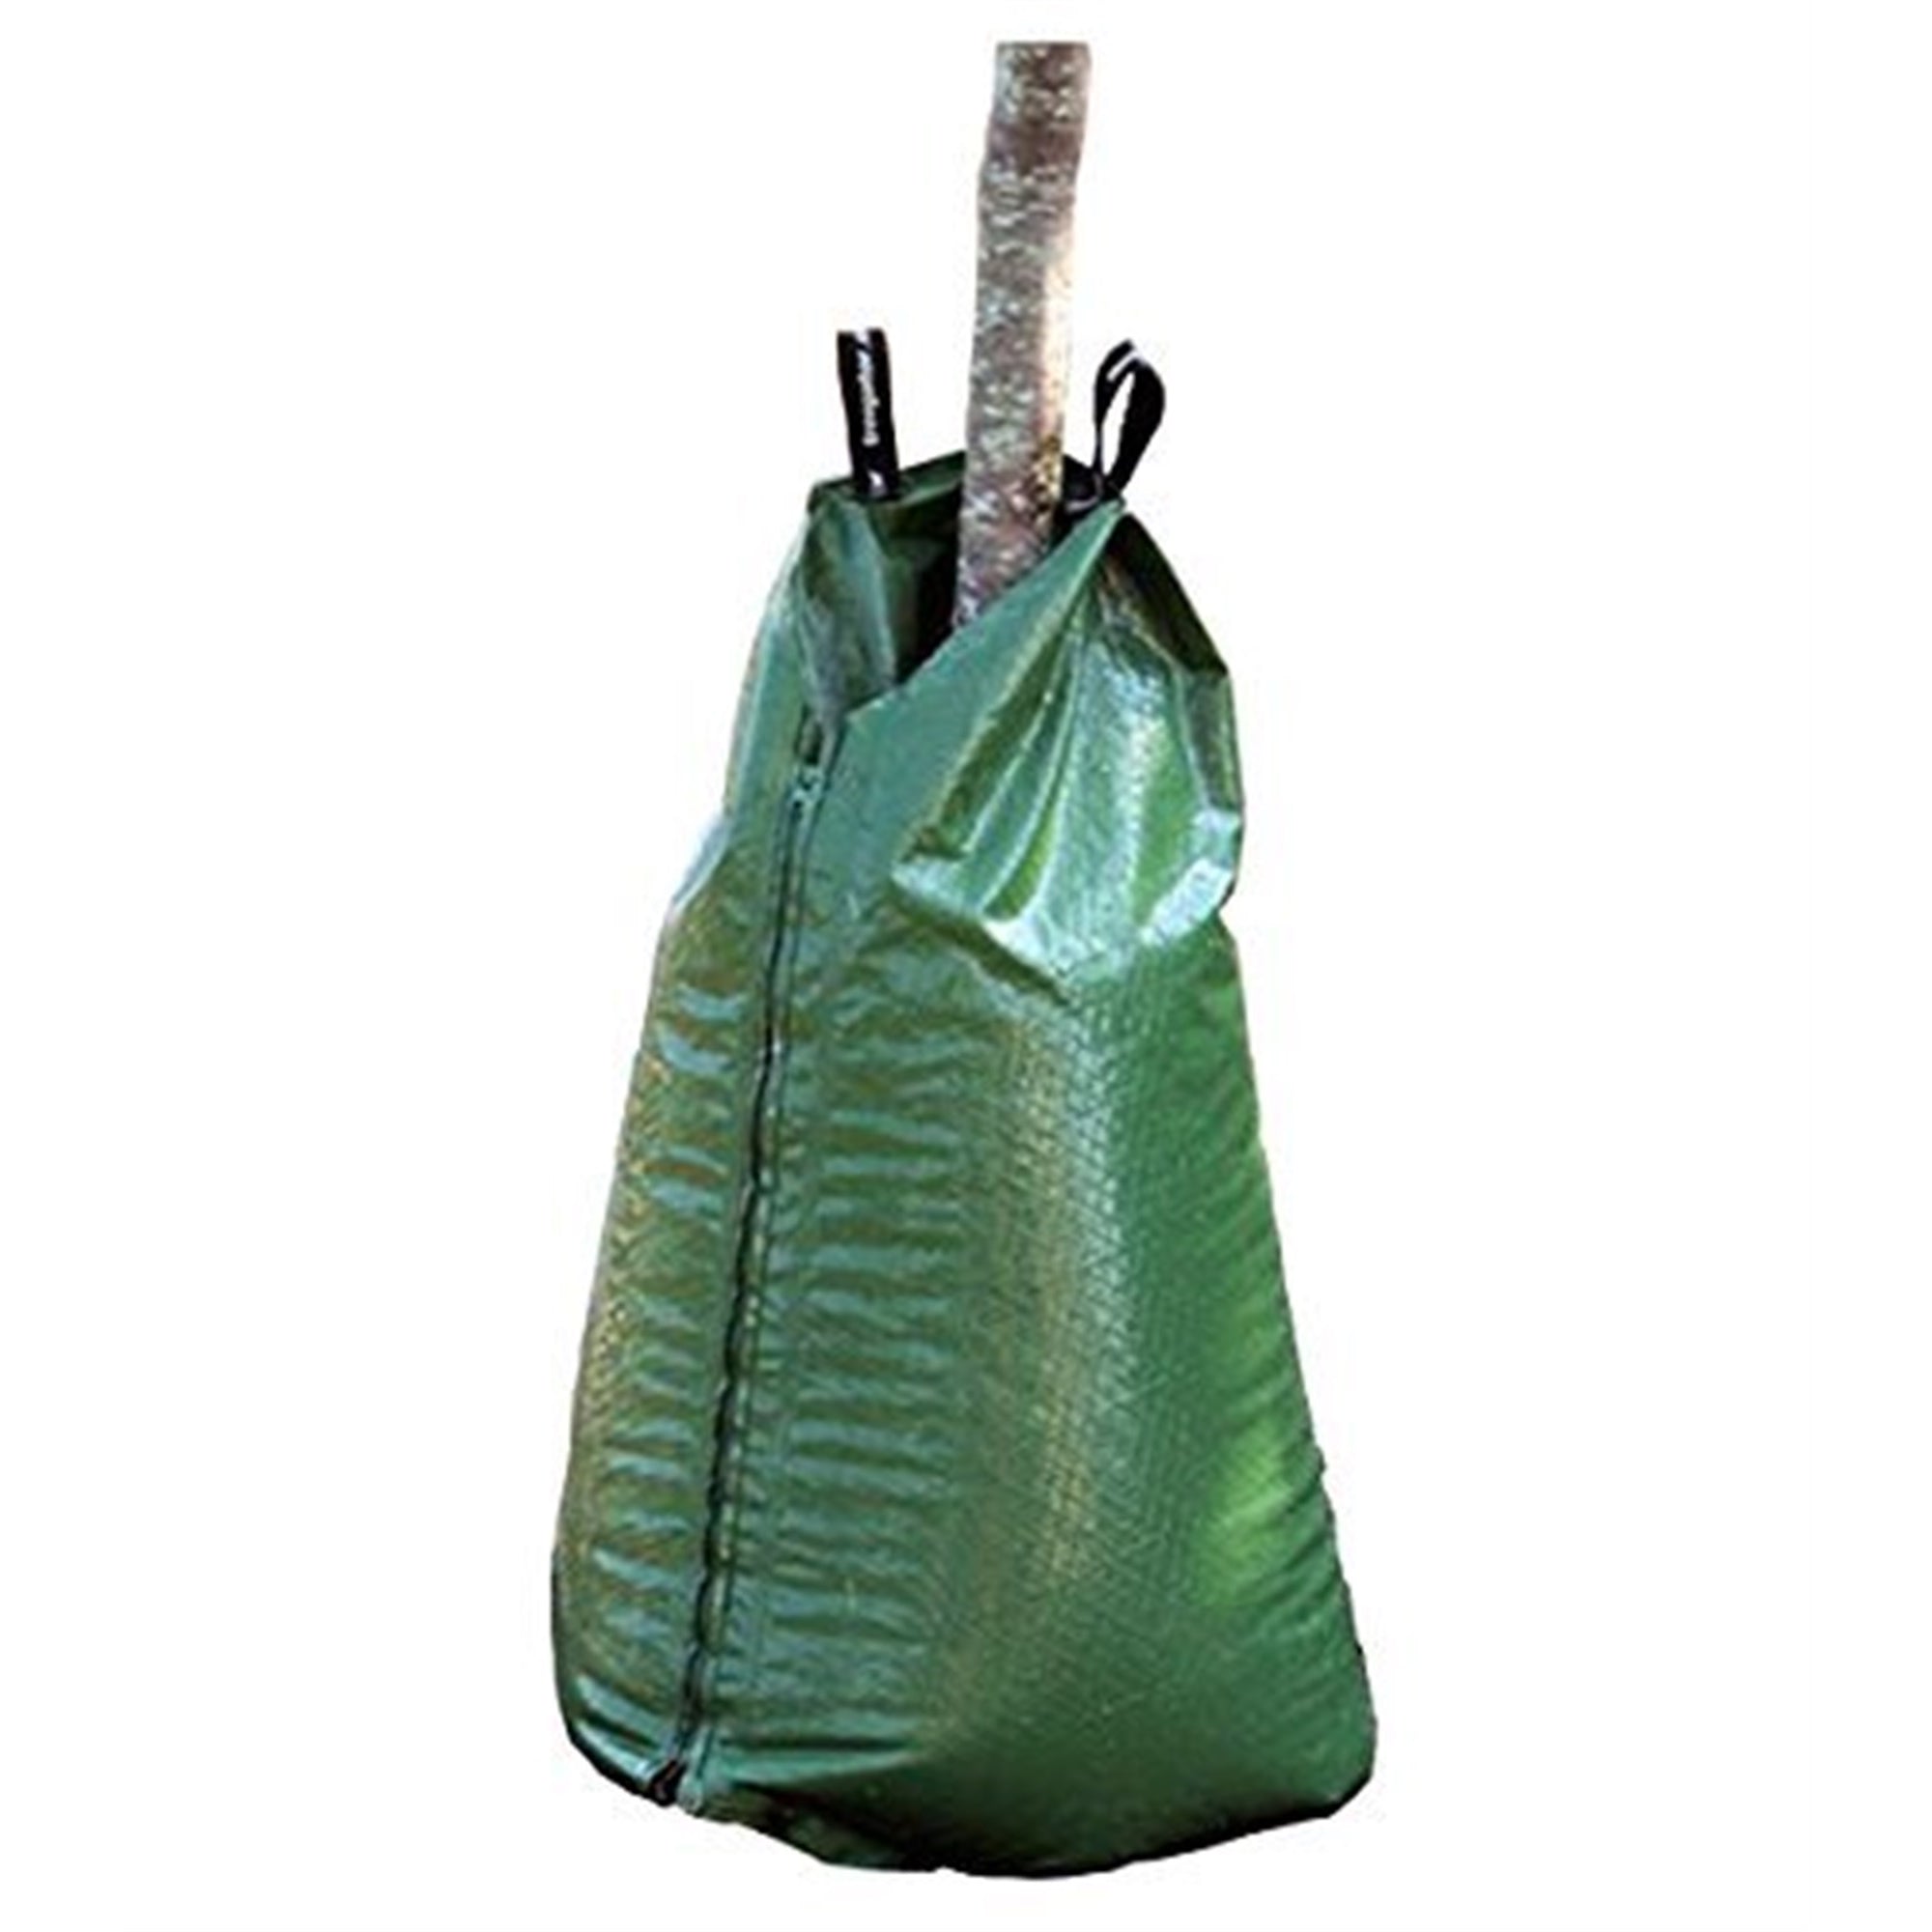 Treegator Original Slow Release Watering Bag for Trees, One Bag